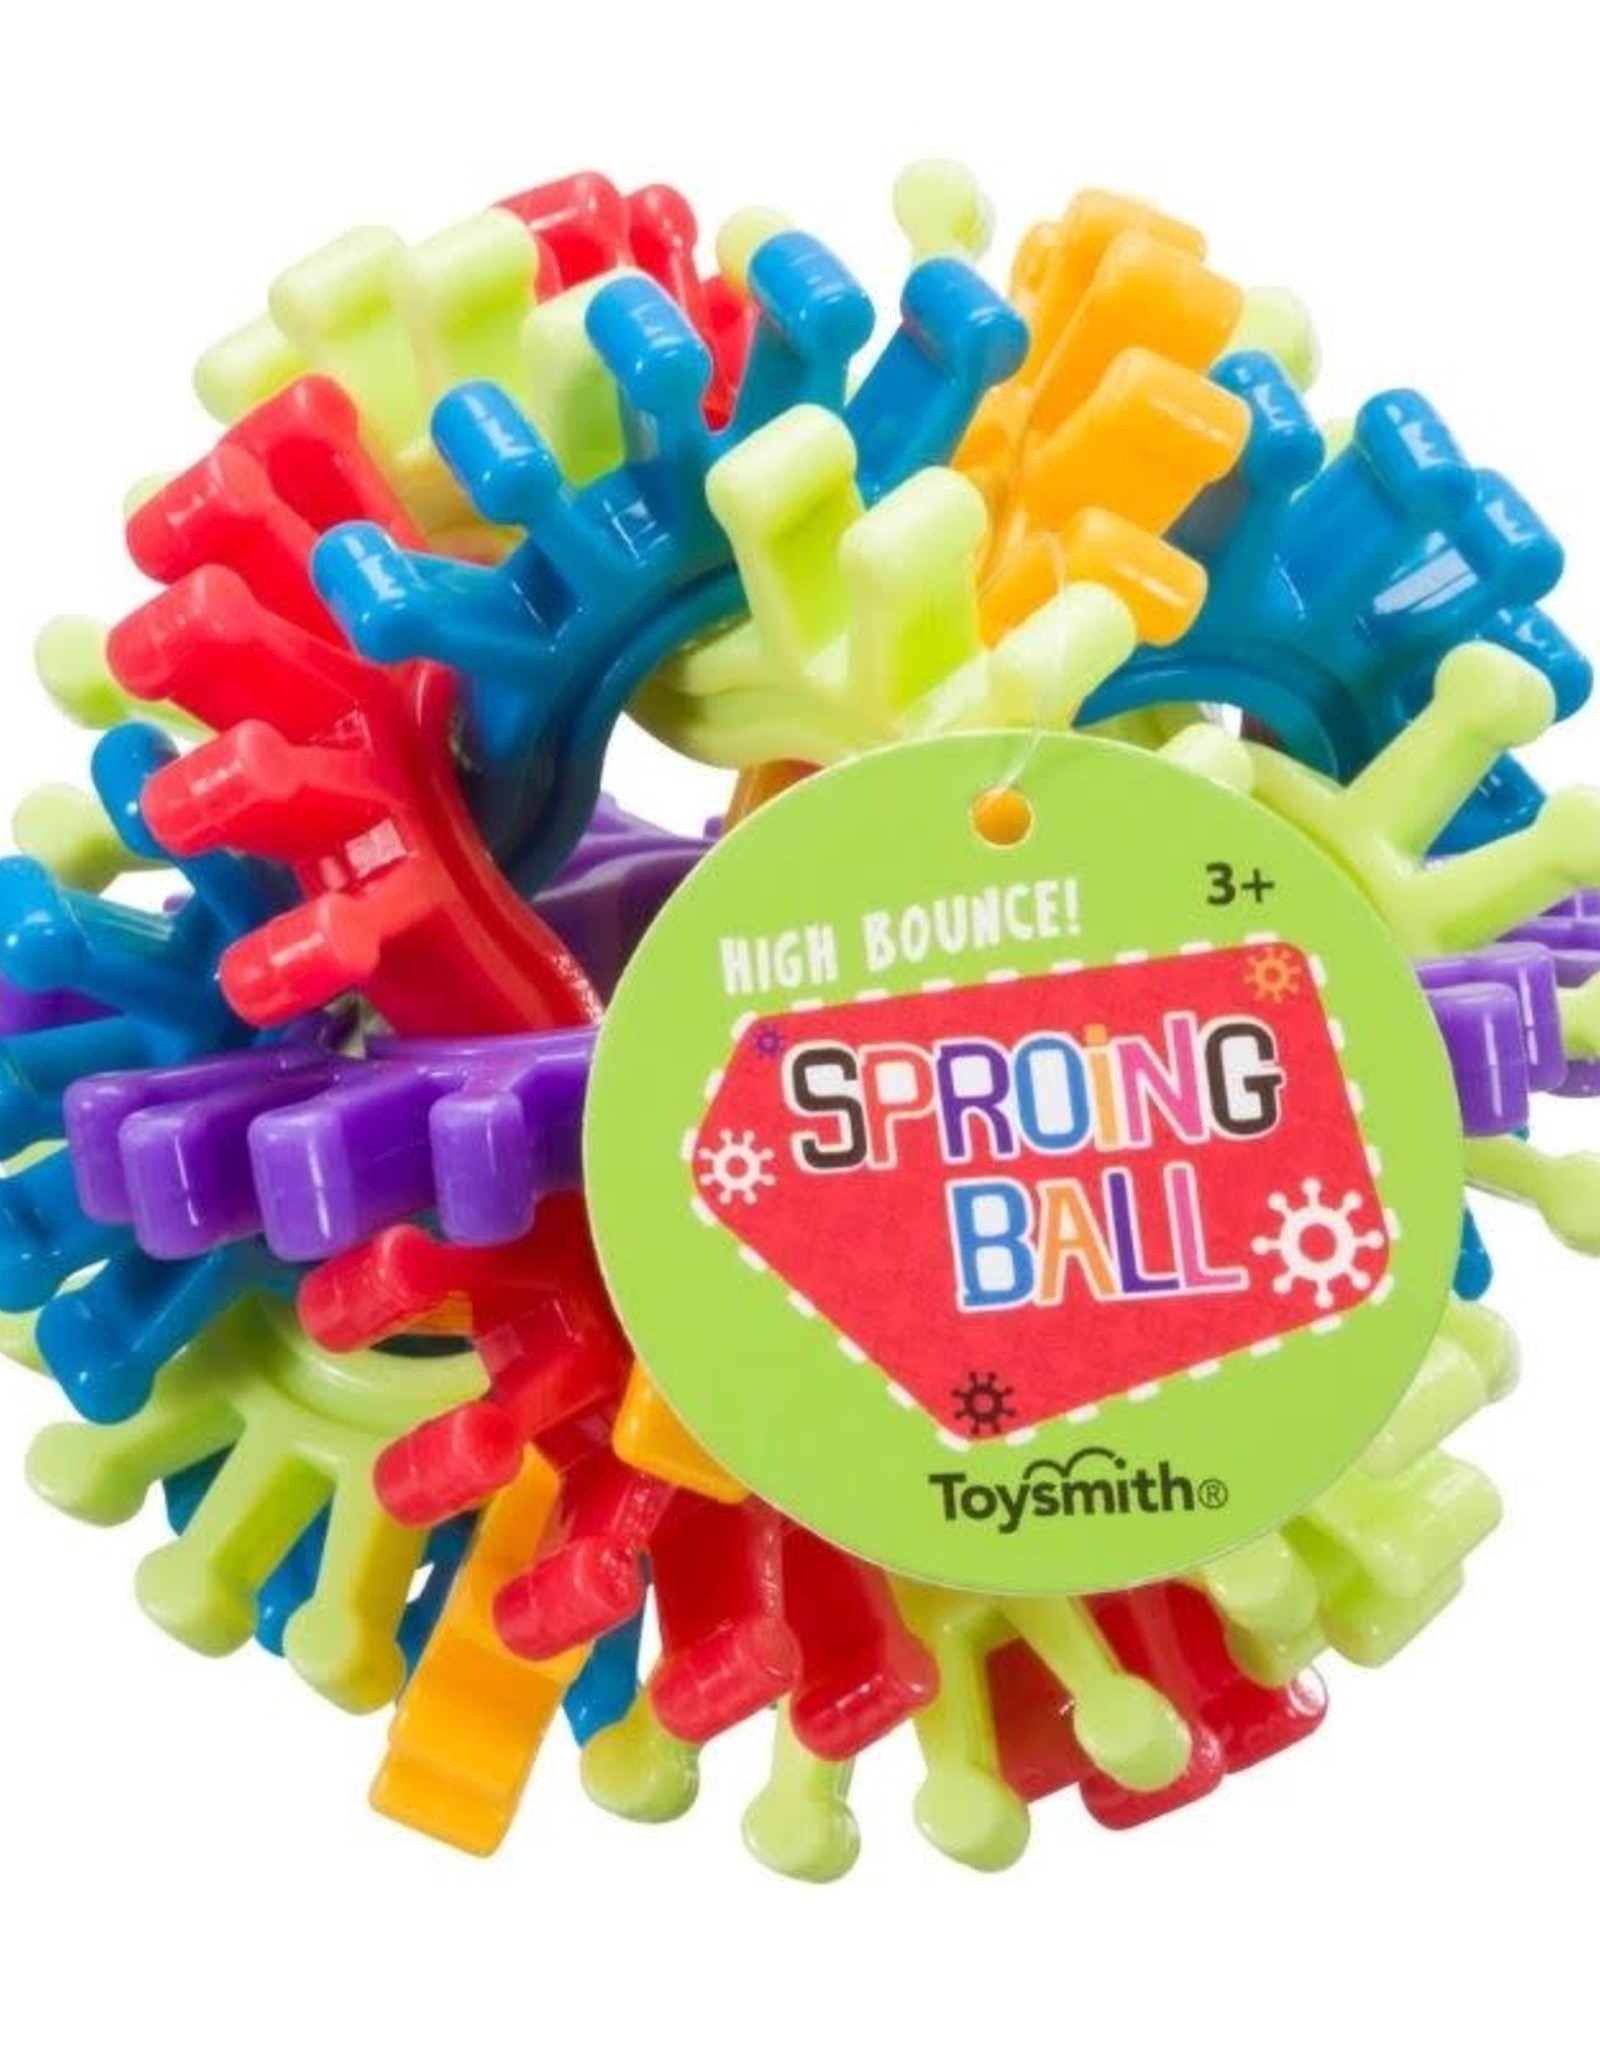 Toysmith Sproing Ball